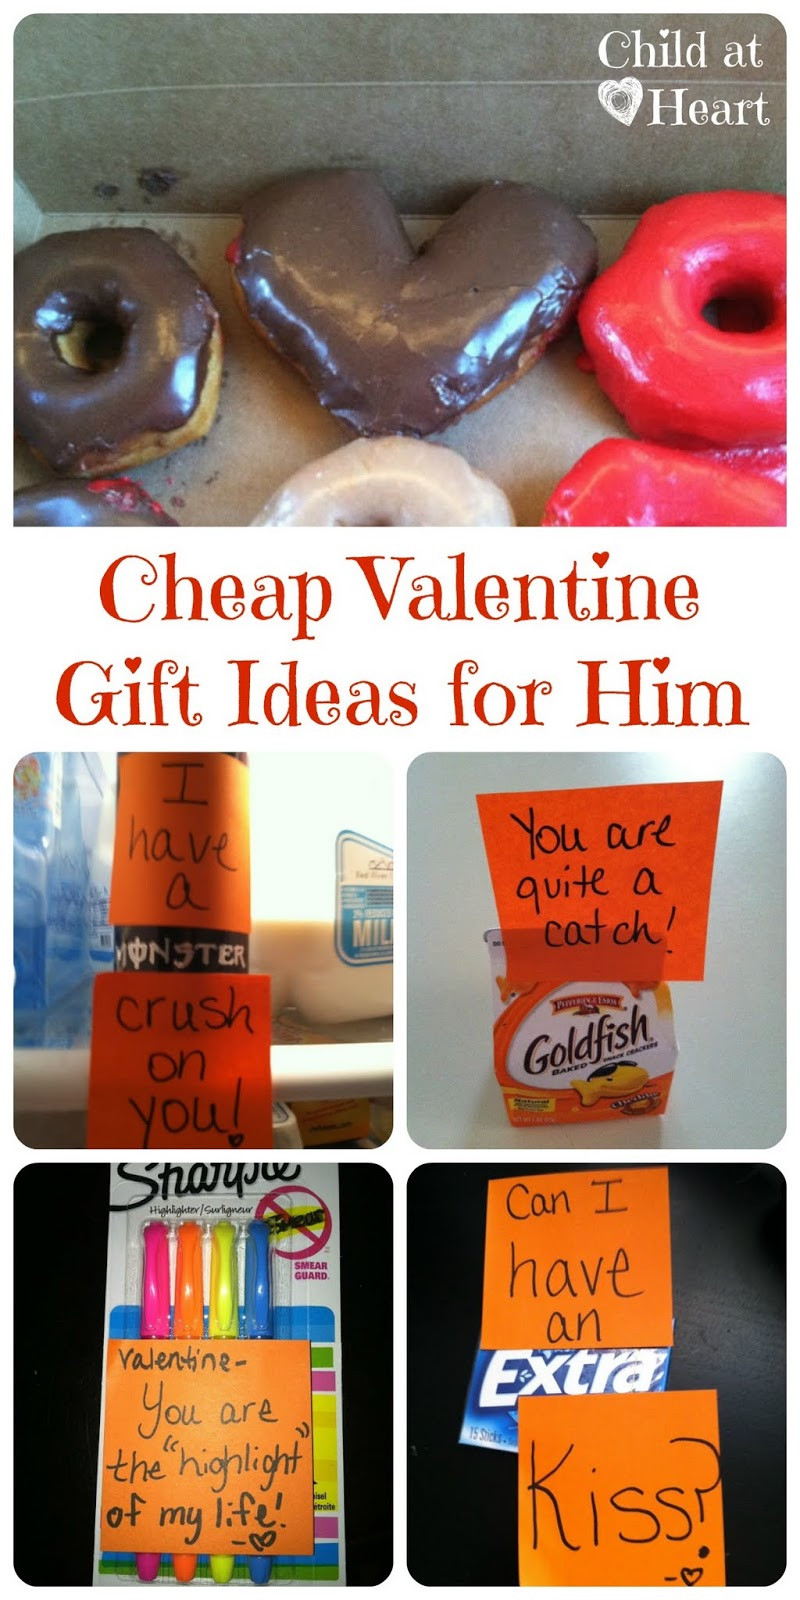 Cute Valentines Day Ideas For Boyfriend
 Cheap Valentine Gift Ideas for Him Child at Heart Blog